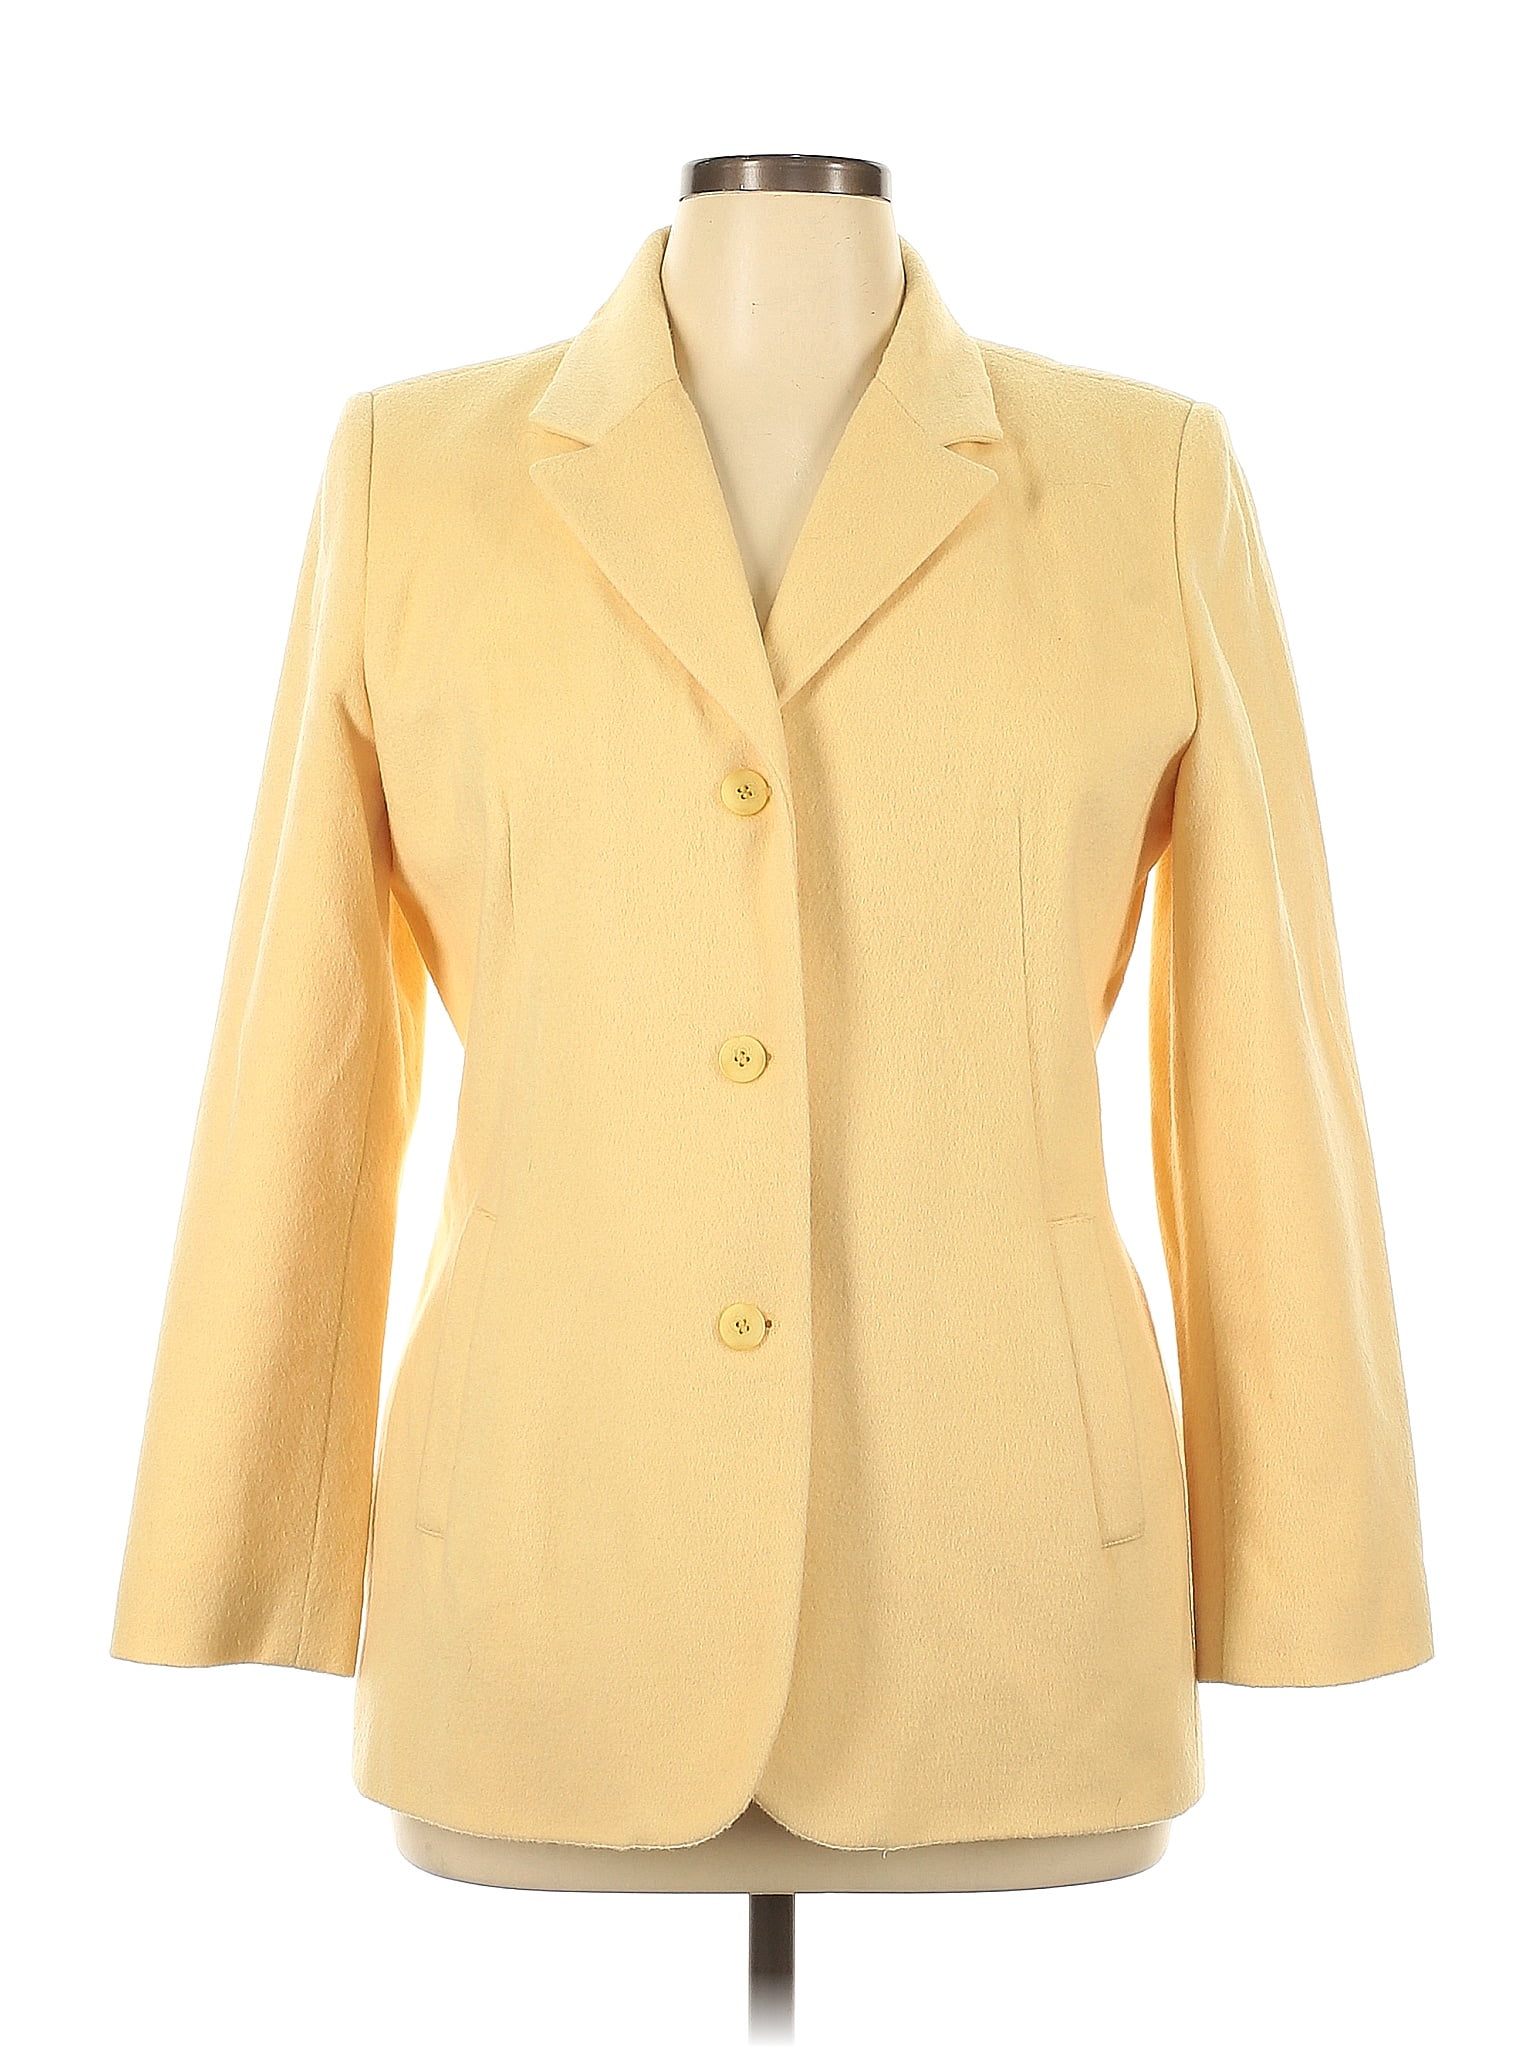 Harve Benard by Benard Holtzman Solid Yellow Wool Blazer Size 14